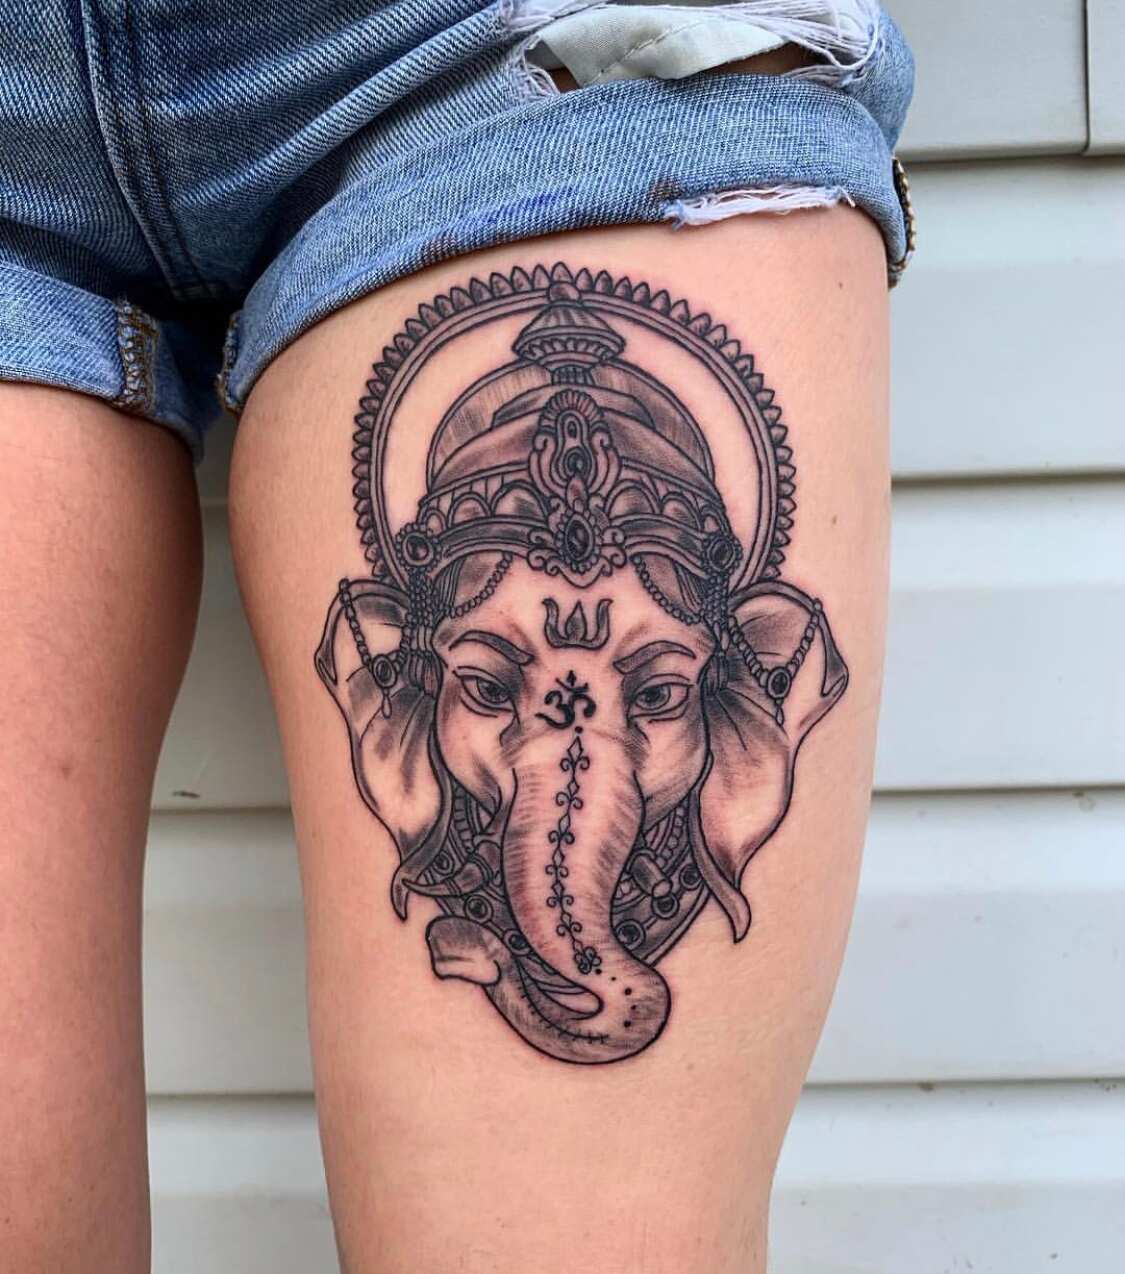 50 Beautiful Ganesha Tattoos designs and ideas With Meaning | Ganesha tattoo,  Ganesh tattoo, Ganesha drawing